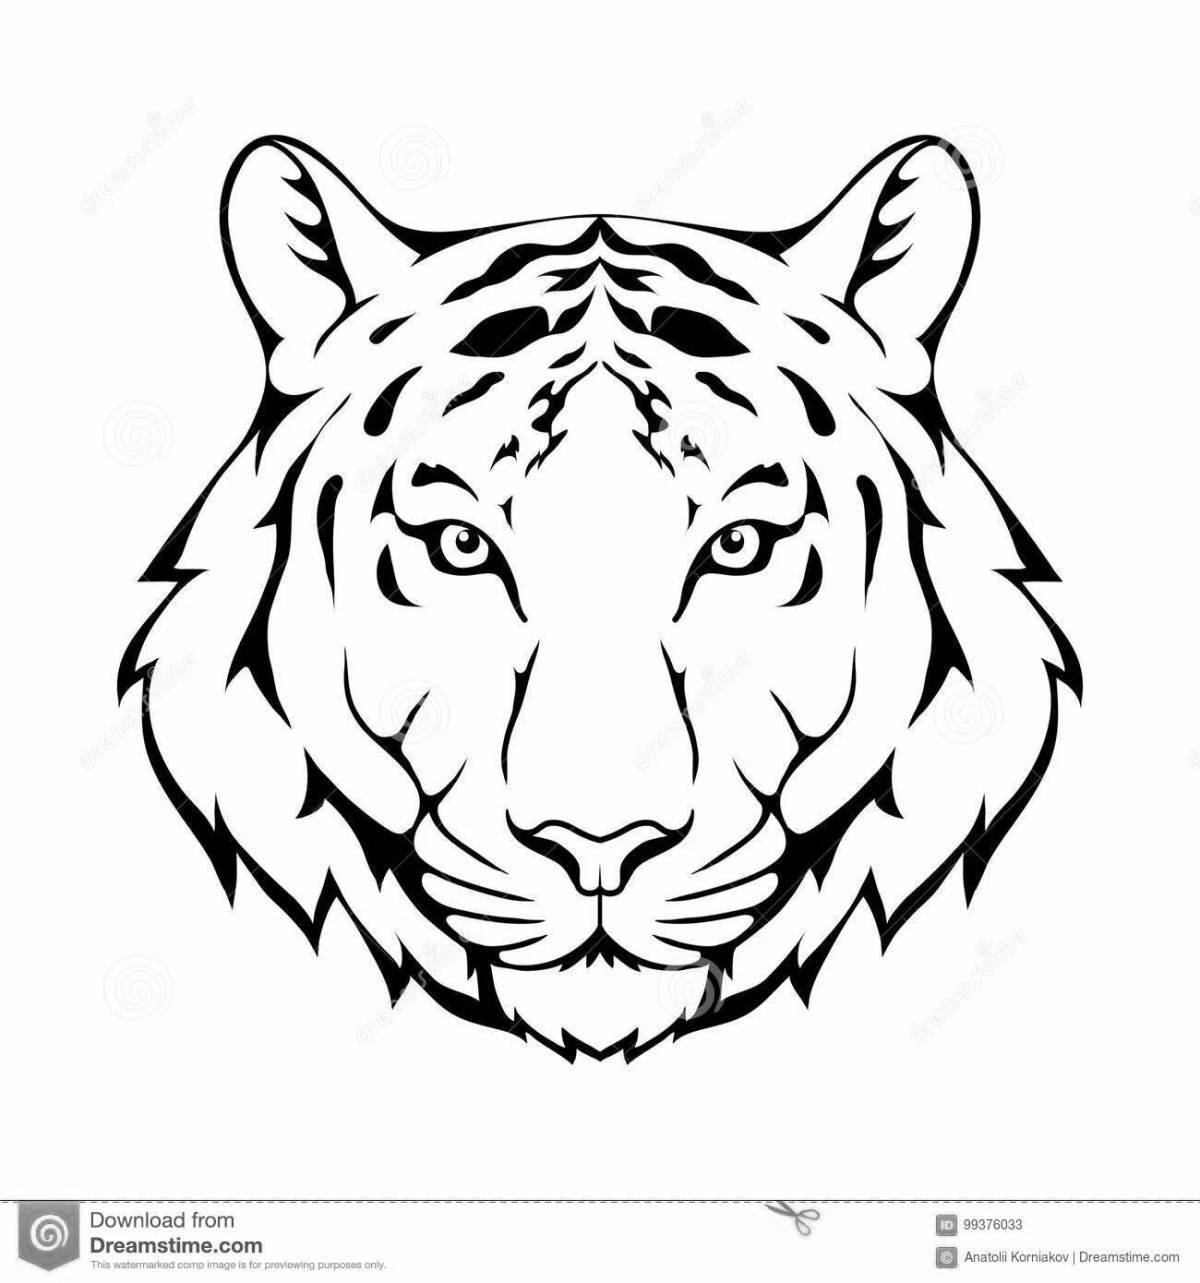 Great tiger head coloring book